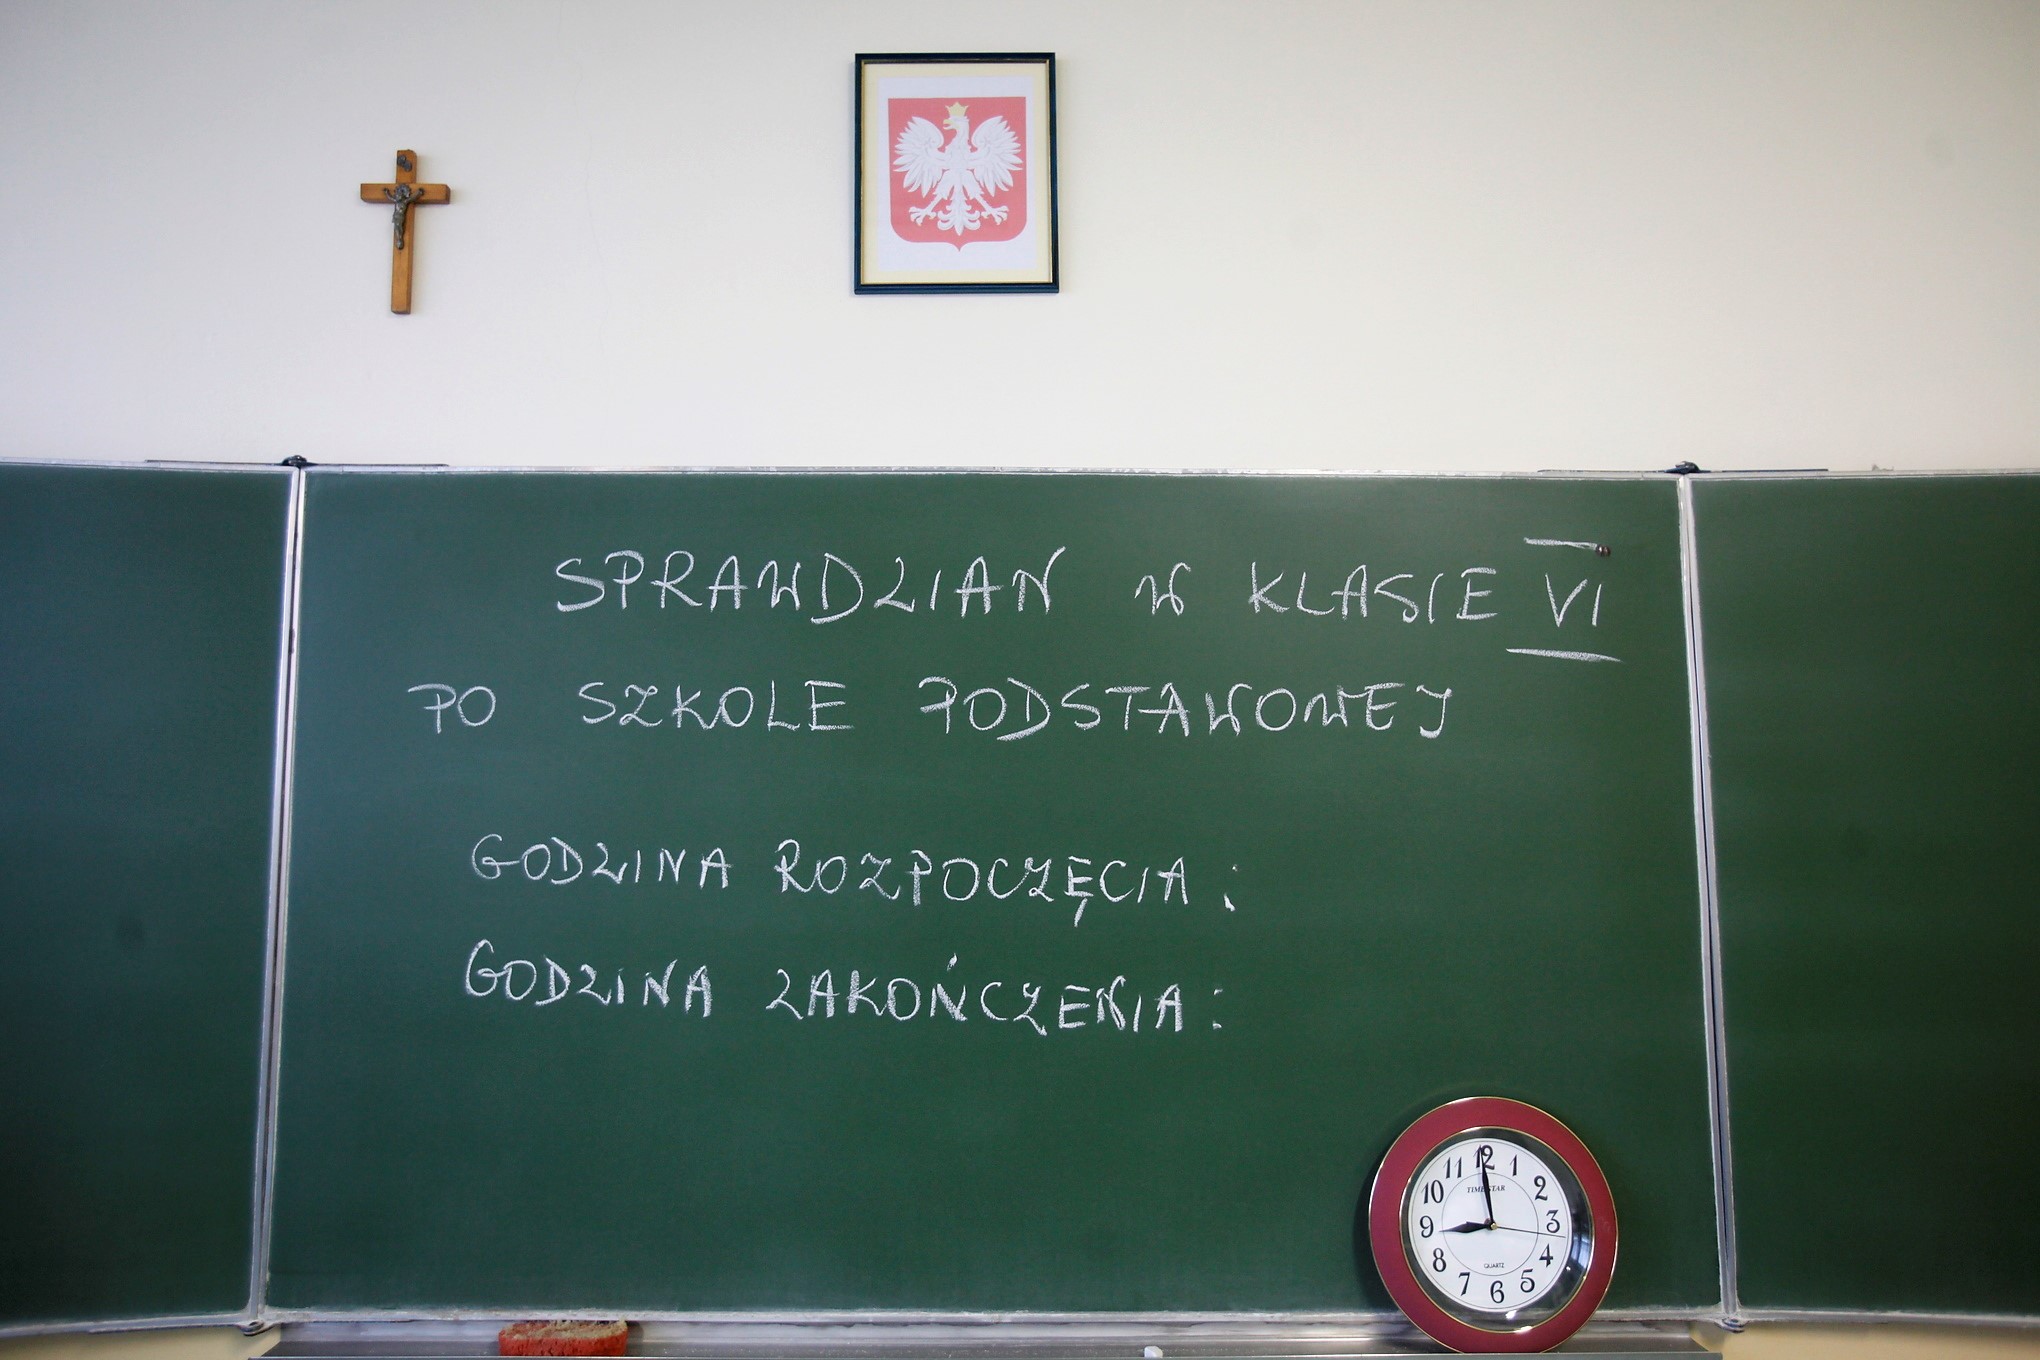 Polish government picks Catholic universities to train teachers for compulsory school ethics classes